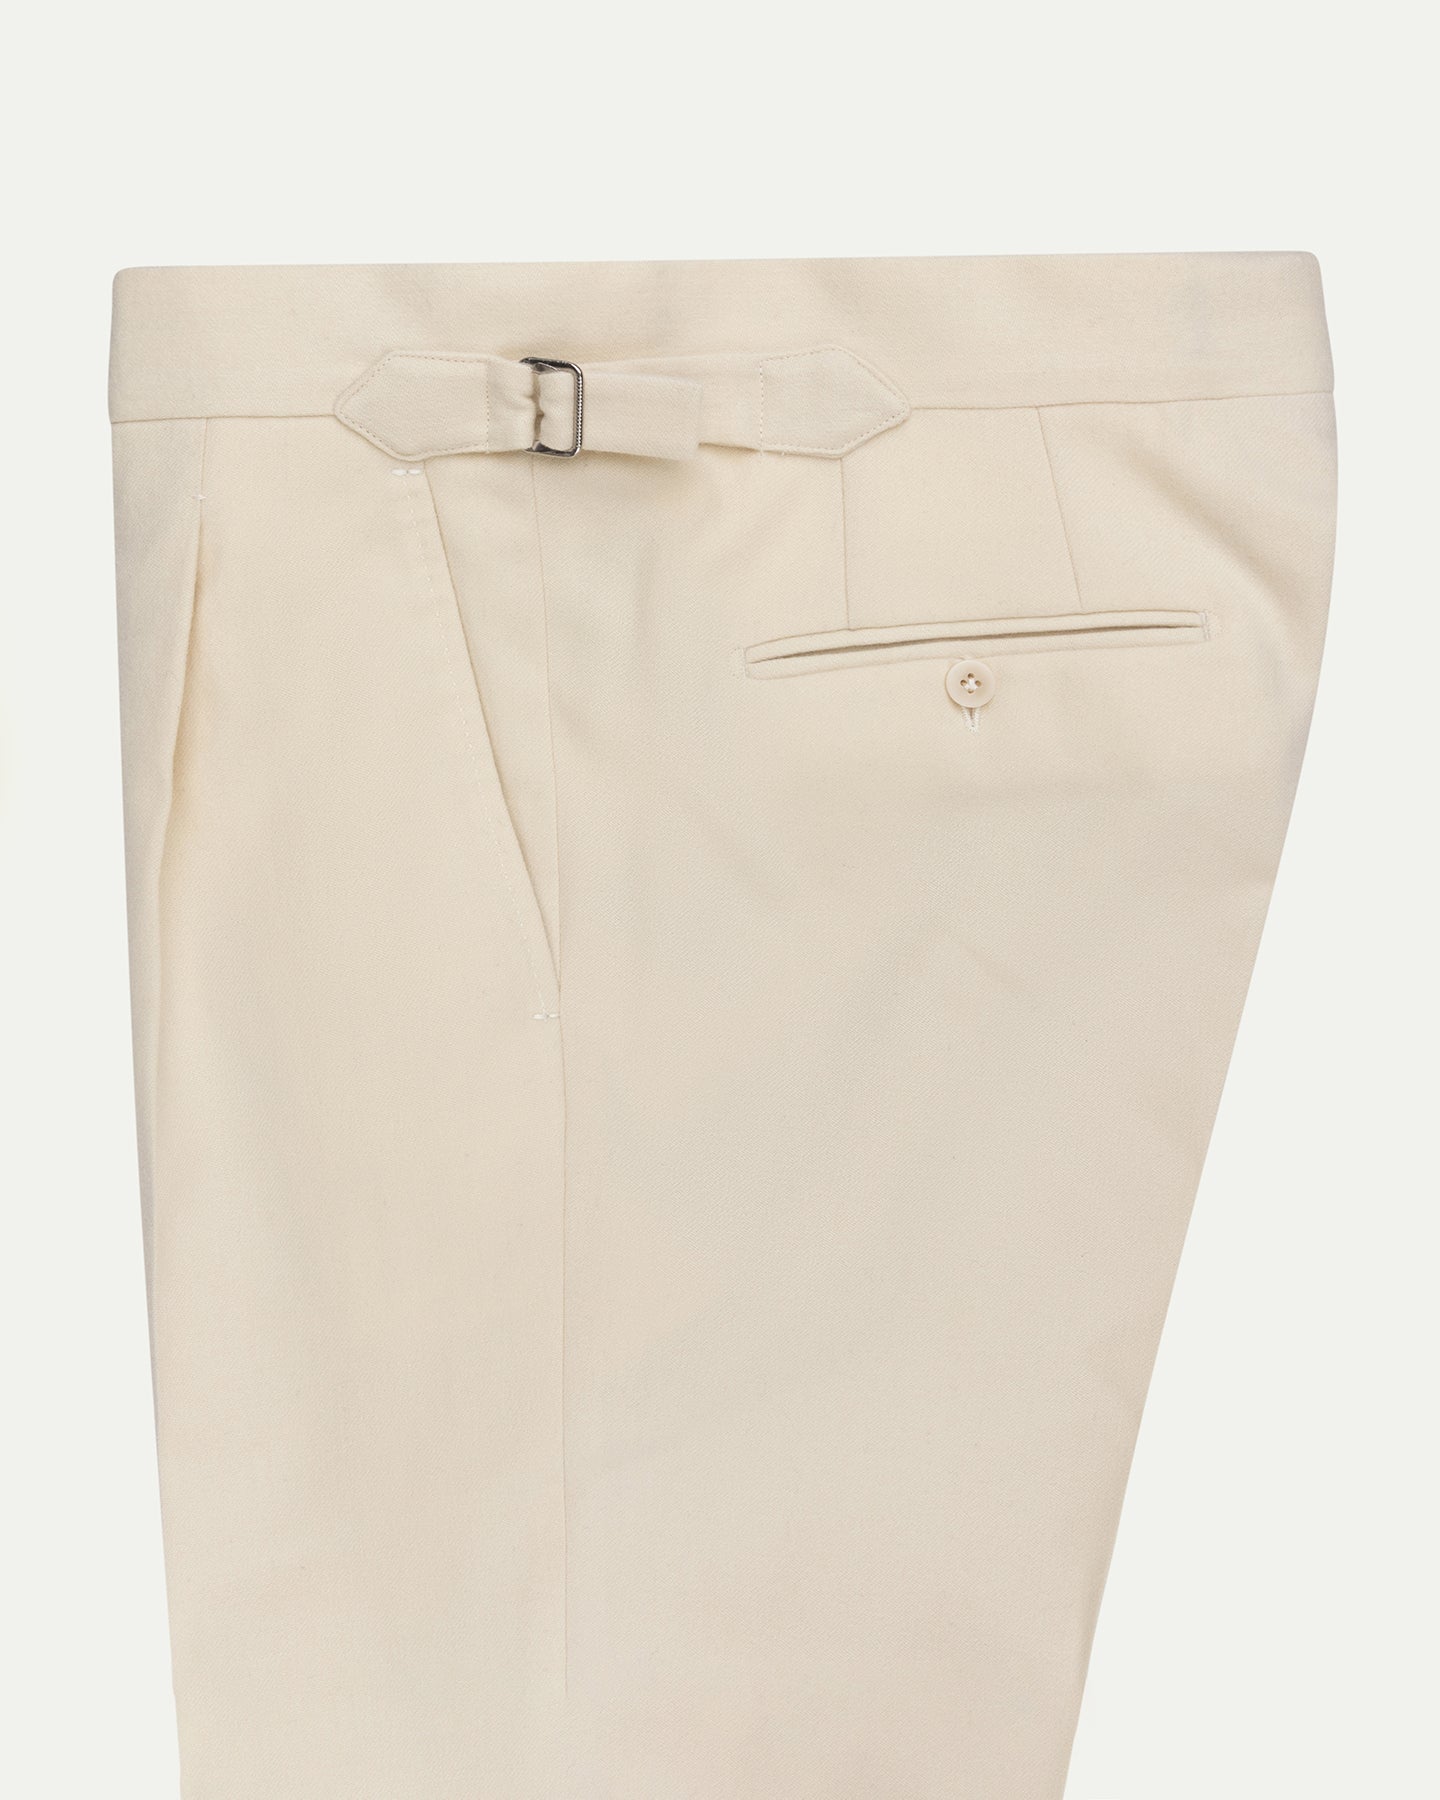 Cricket Uniform Pants Trousers and Kit Manufacturer & Supplier SMCK203